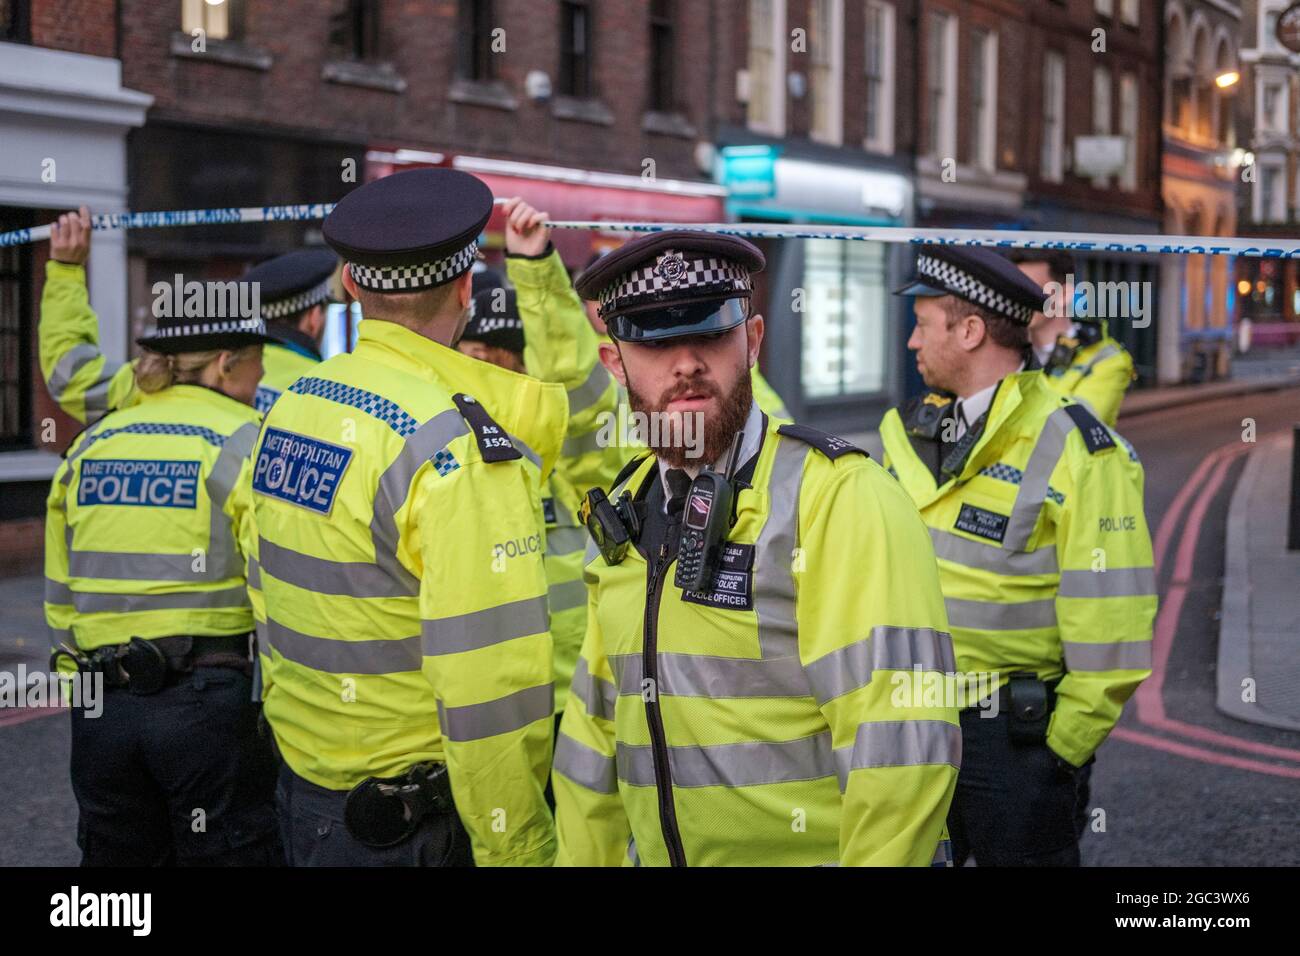 Metropolitan Police officers cordoning off a crime scene, during London Bridge terror attack on 29 of novemebr 2019, London, England Stock Photo